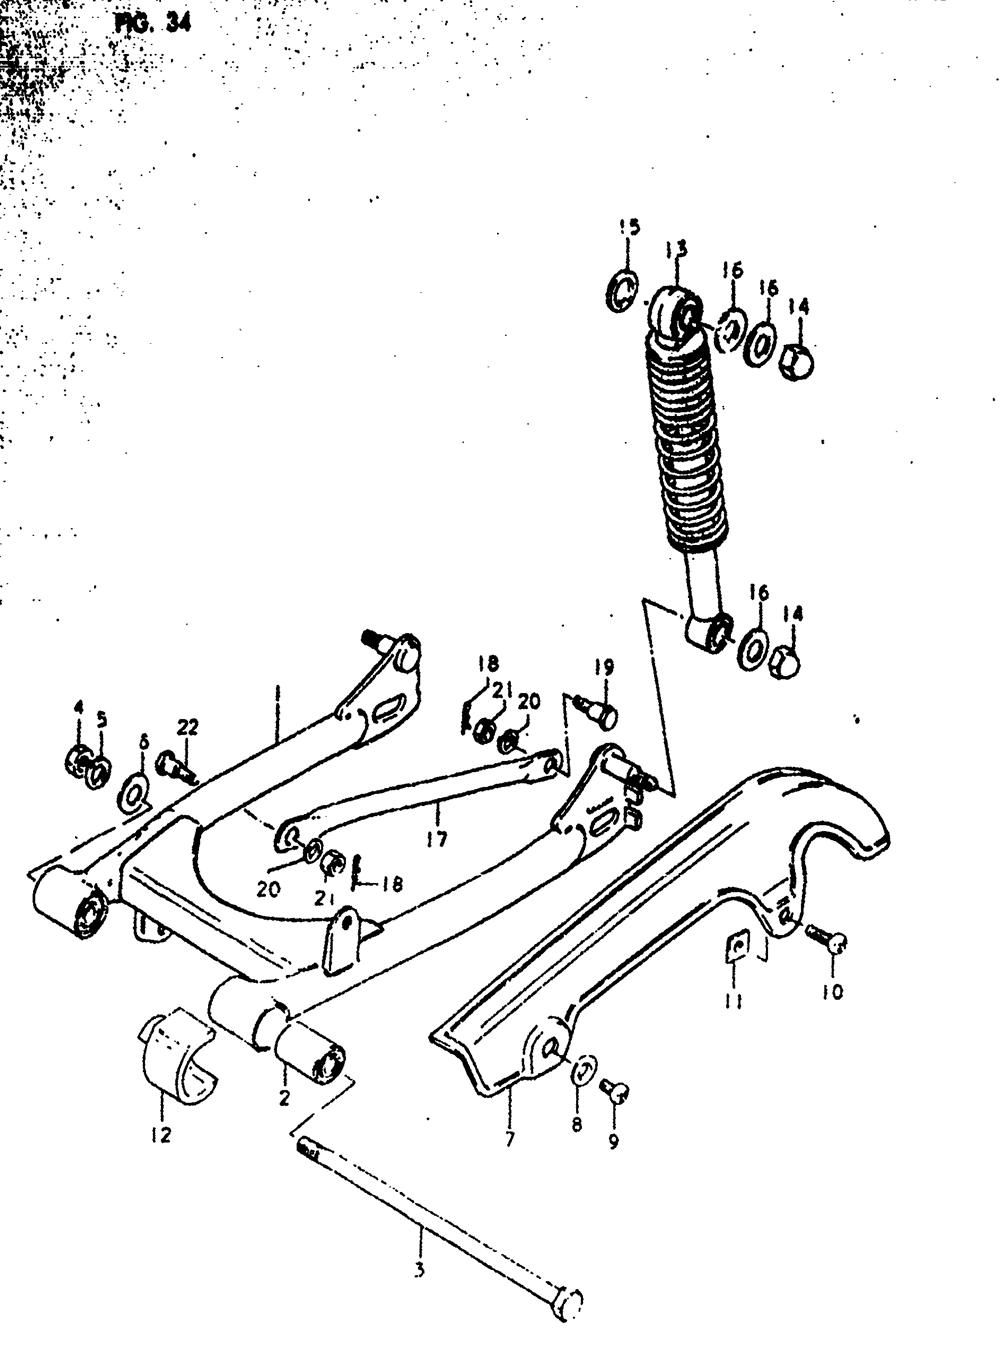 Rear swinging arm (rm50c)